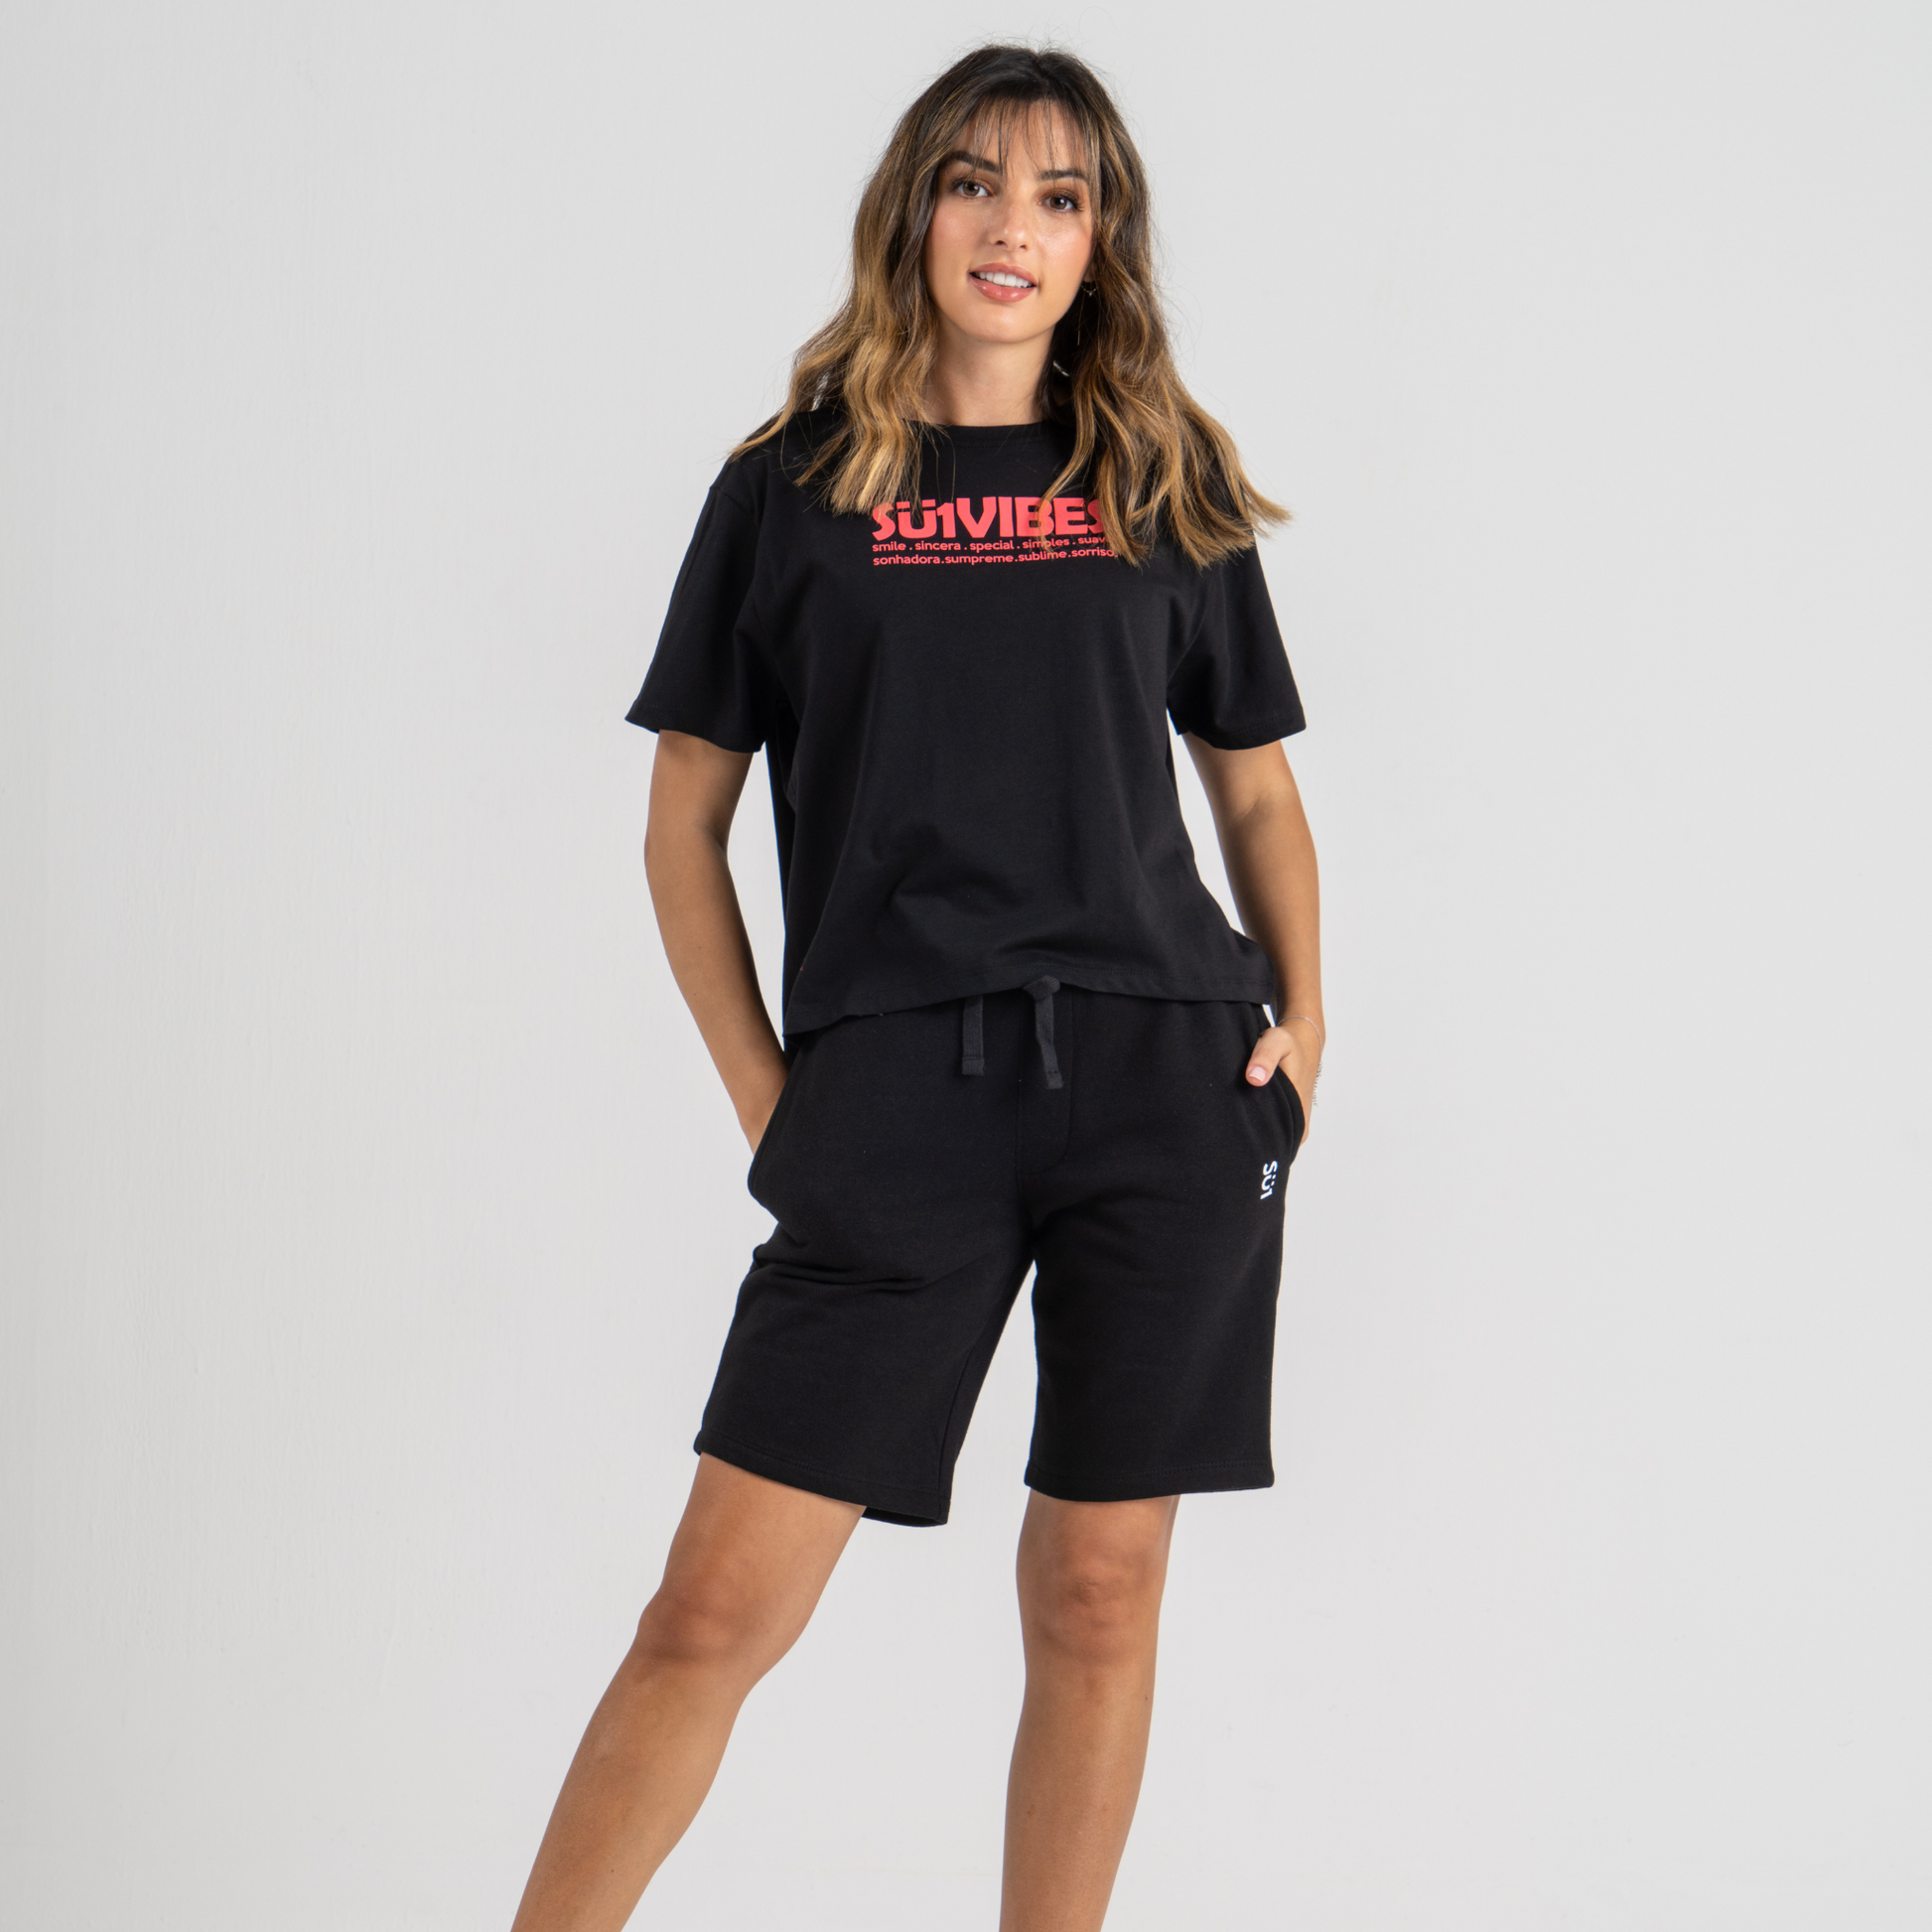 Woman wearing black tshirt mid crop SU1 Brand clothing and black shorts